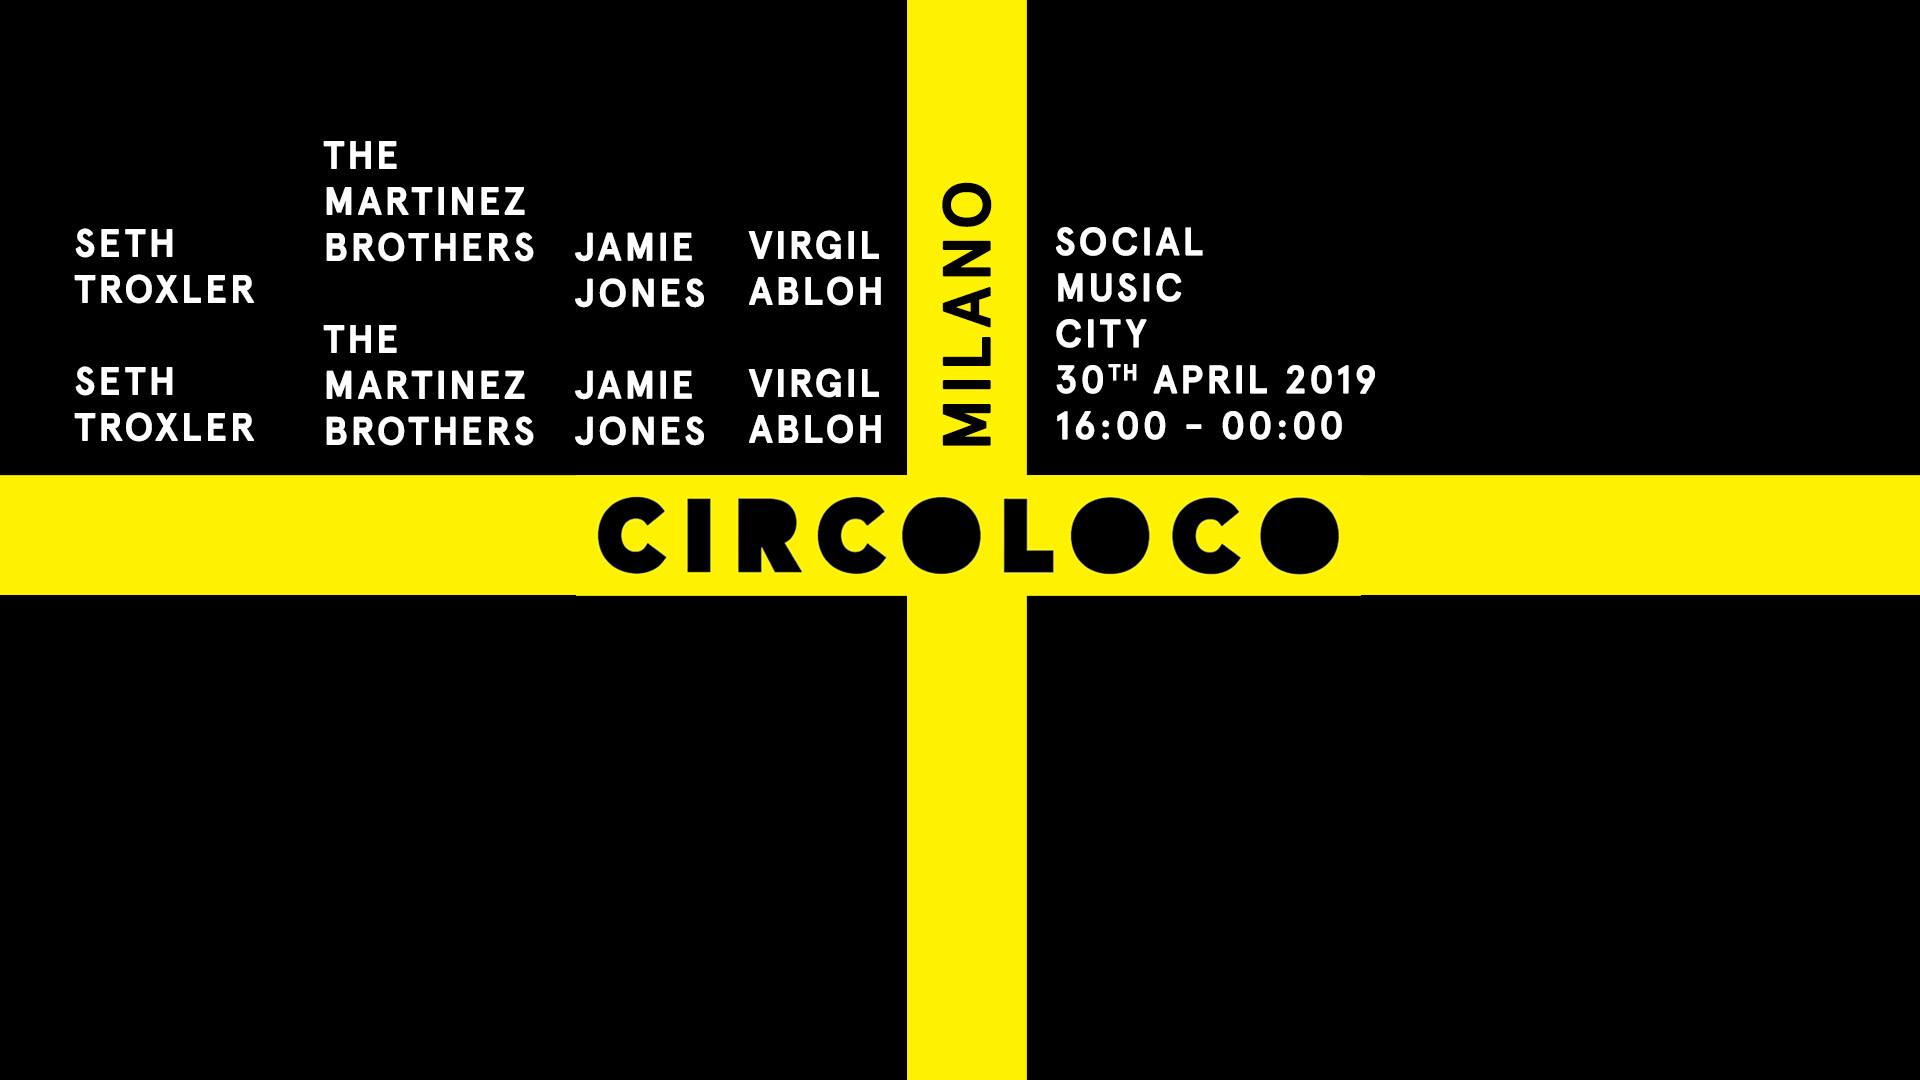 Circoloco Milano Social Music City 30 Aprile 2019